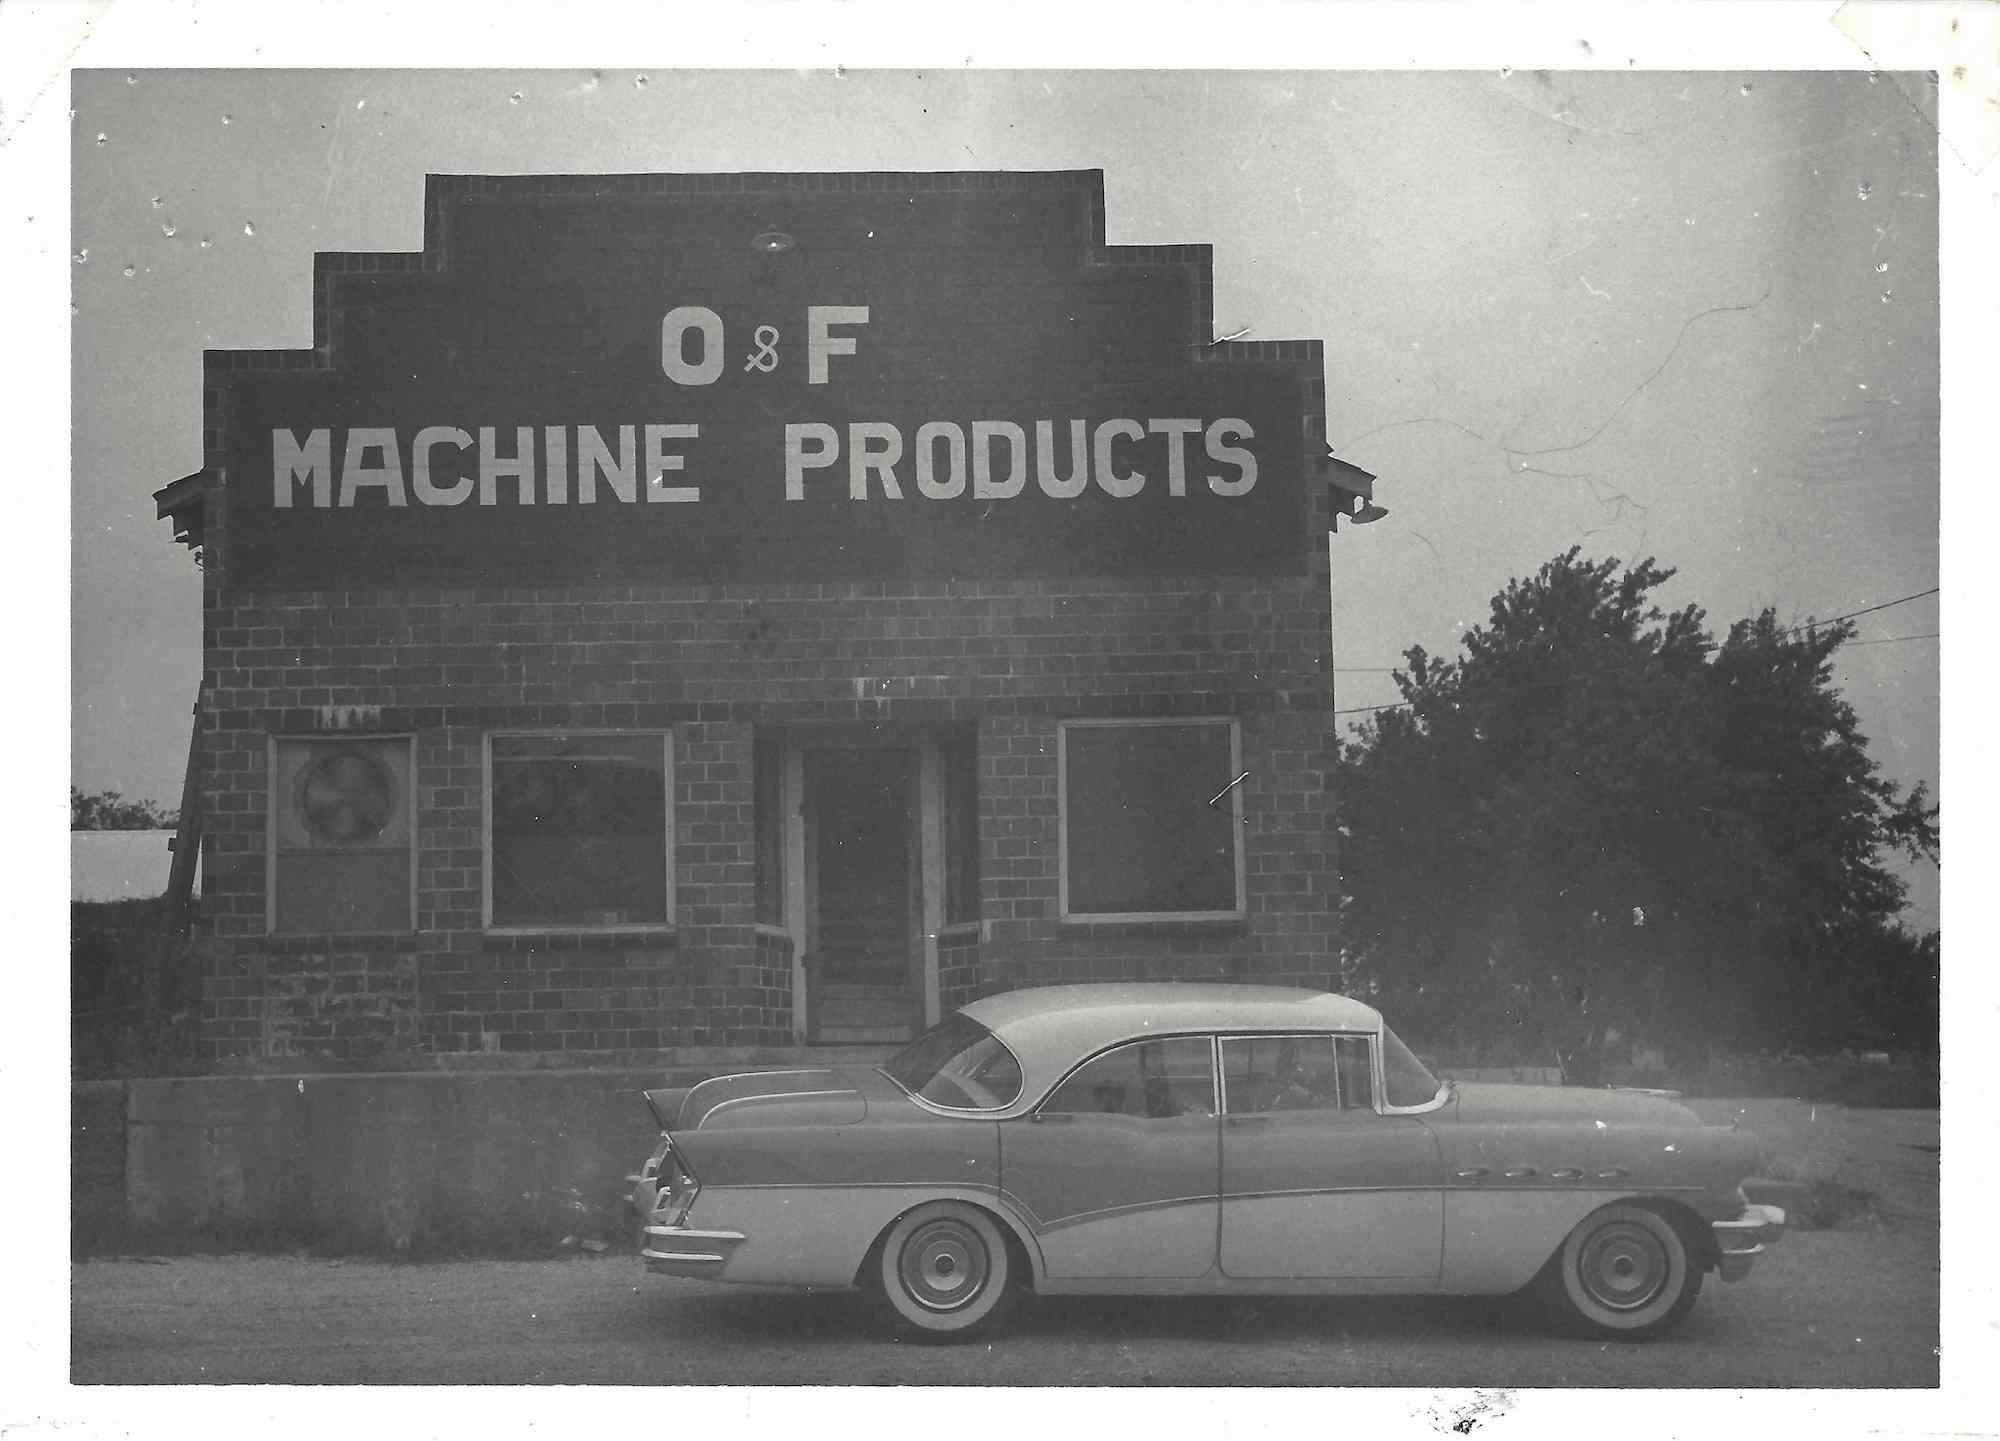 O&F old shop front image